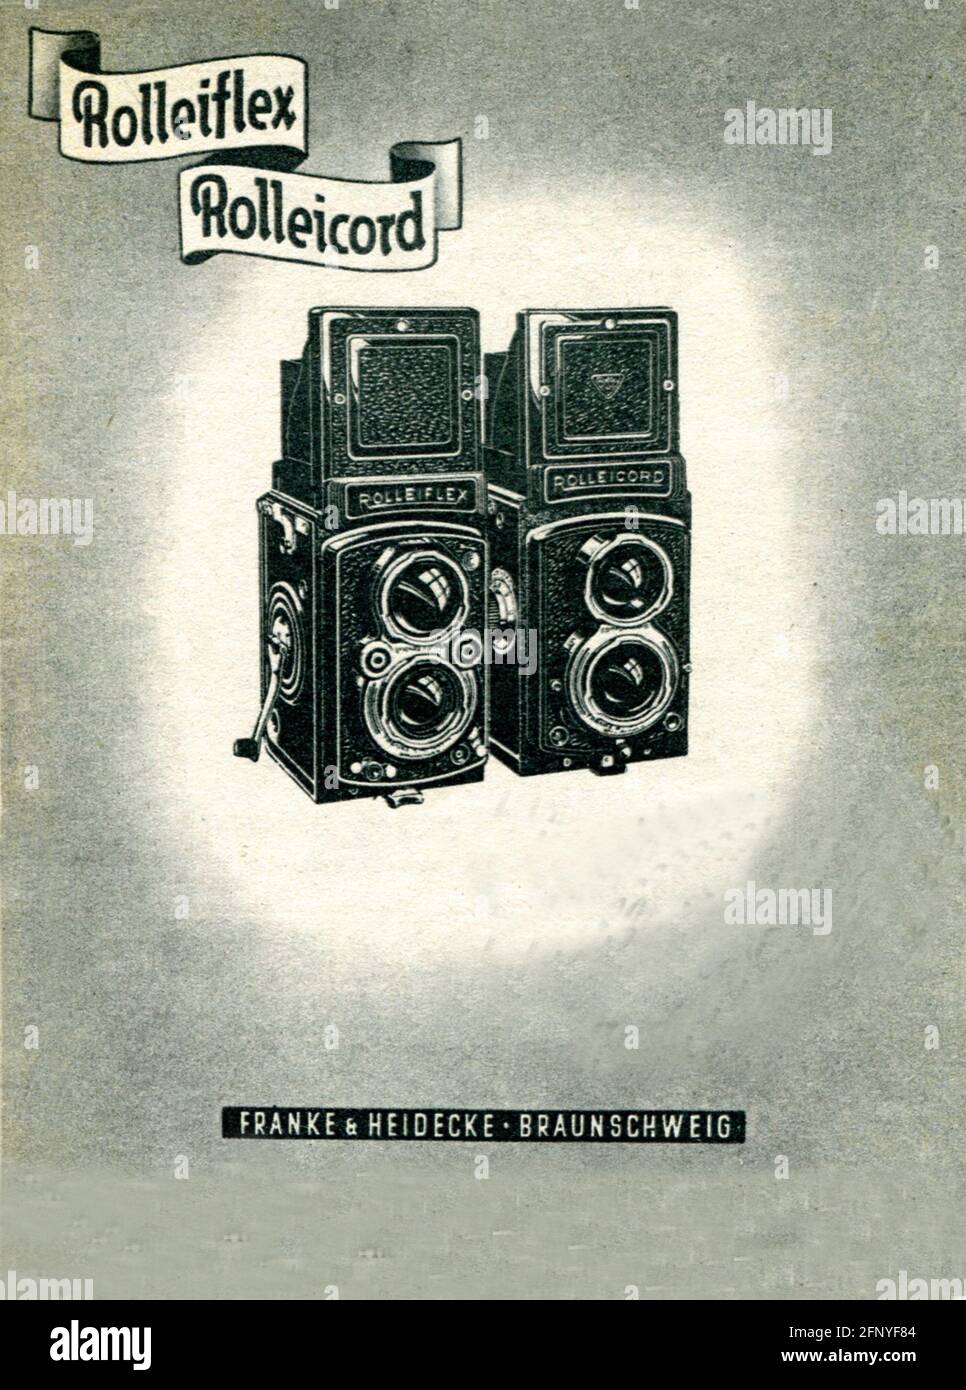 Rolleiflex camera. Vintage old print advertisement from Reader's Digest magazine, Italian edition 1952 Stock Photo